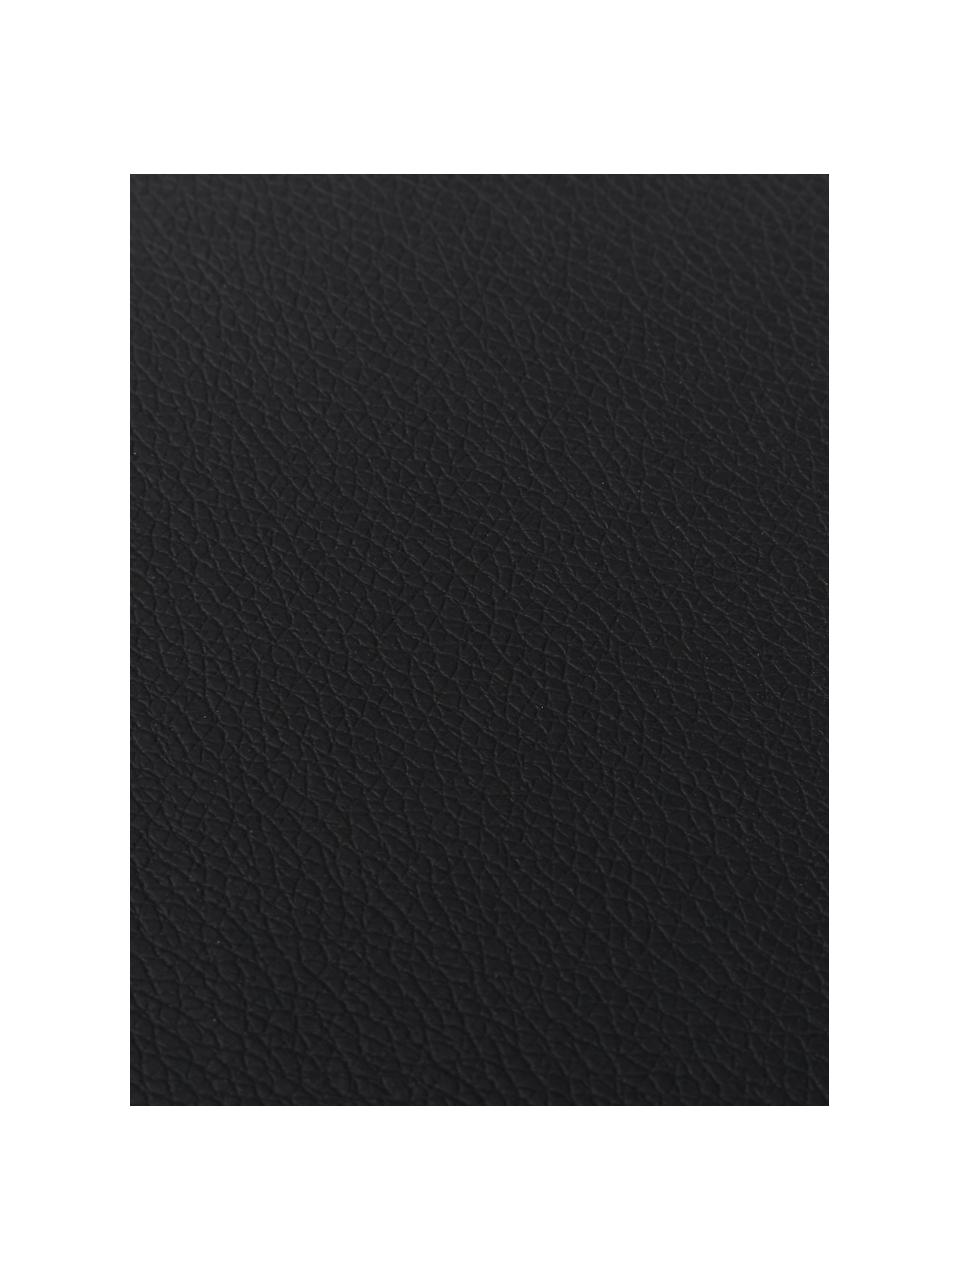 Podkładka ze sztucznej skóry Pik, 2 szt., Tworzywo sztuczne (PVC), Czarny, S 33 x D 46 cm